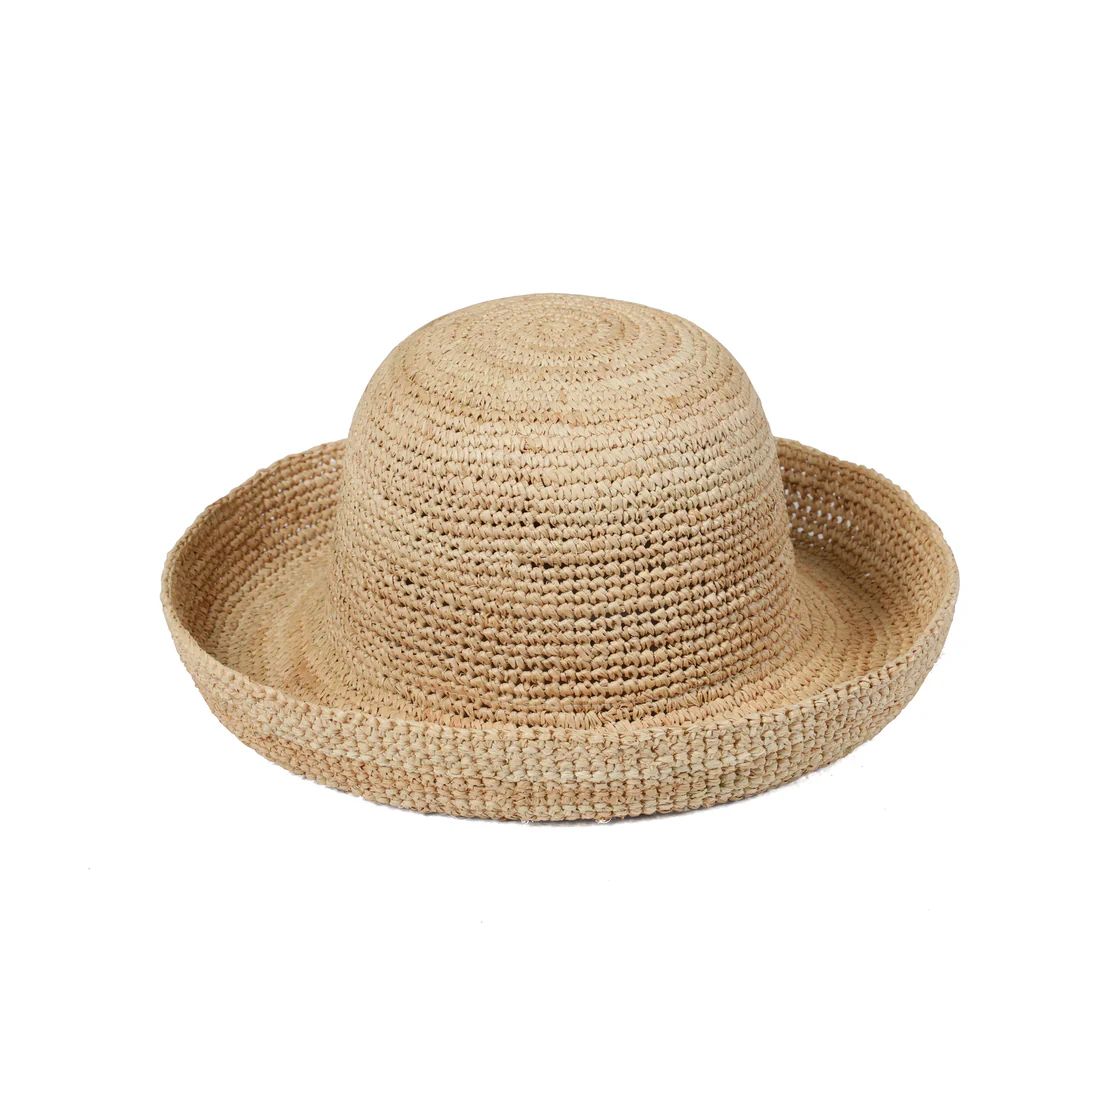 Raffia Cruiser - Straw Boater Hat in Natural | Lack of Color US | Lack of Color